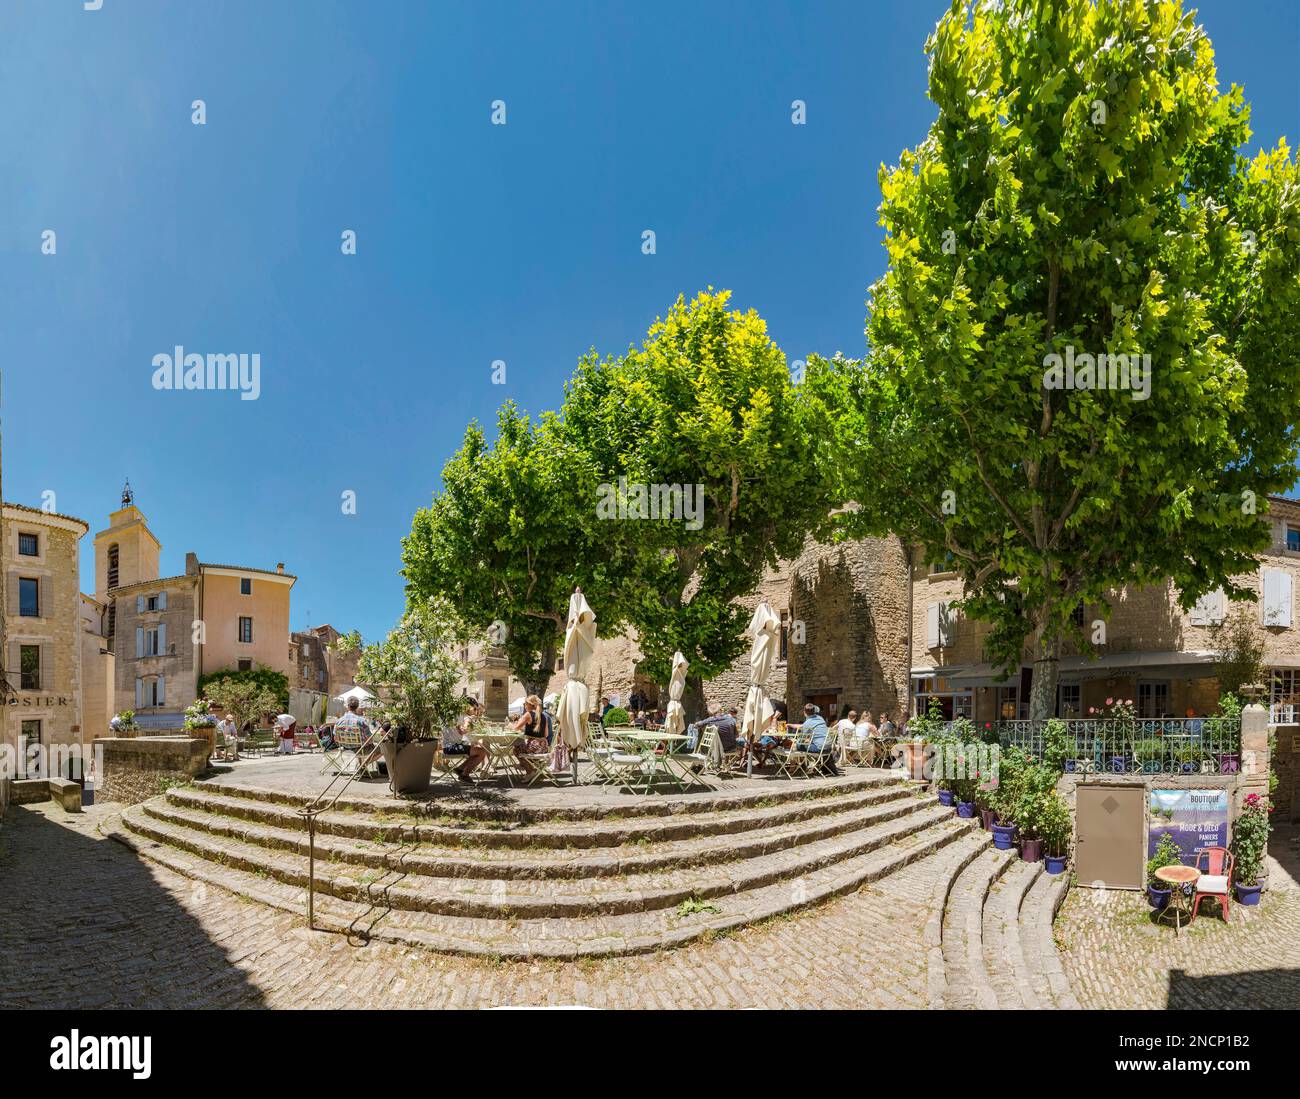 La fontaine de la Place Genty Pantaly Stockfoto